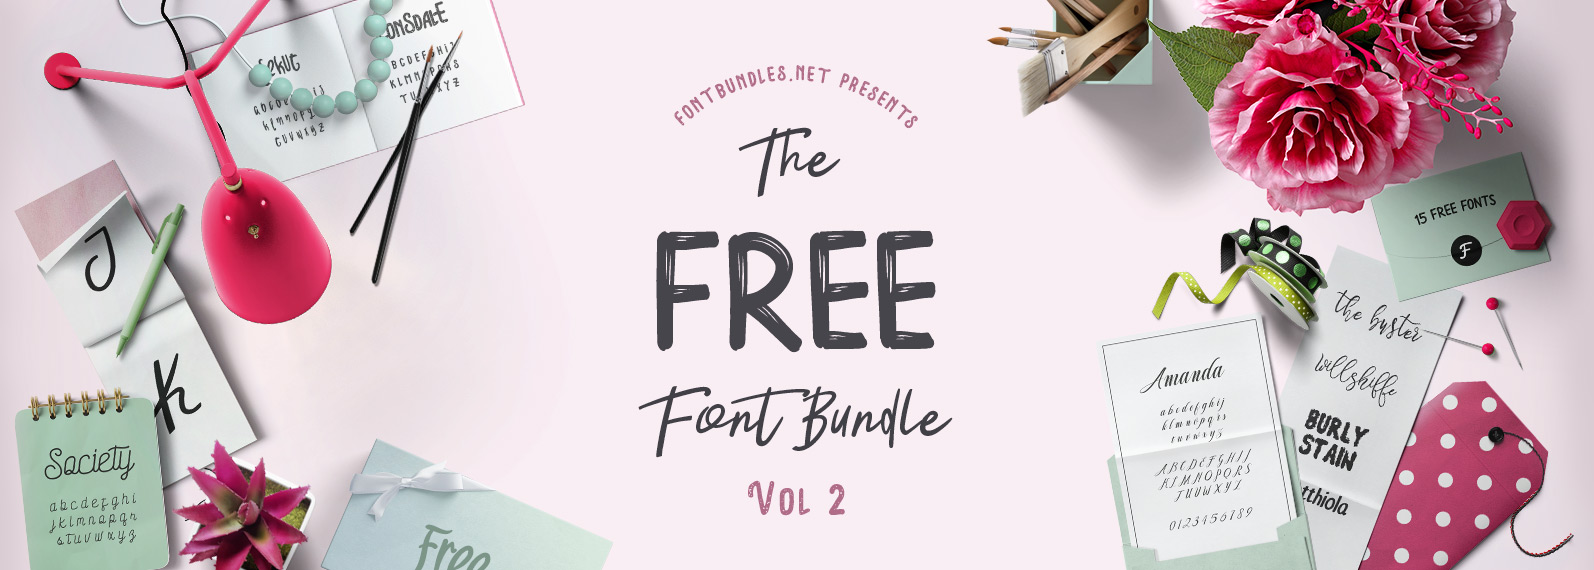 Download The Free Font Bundle Vol II | Font Bundles